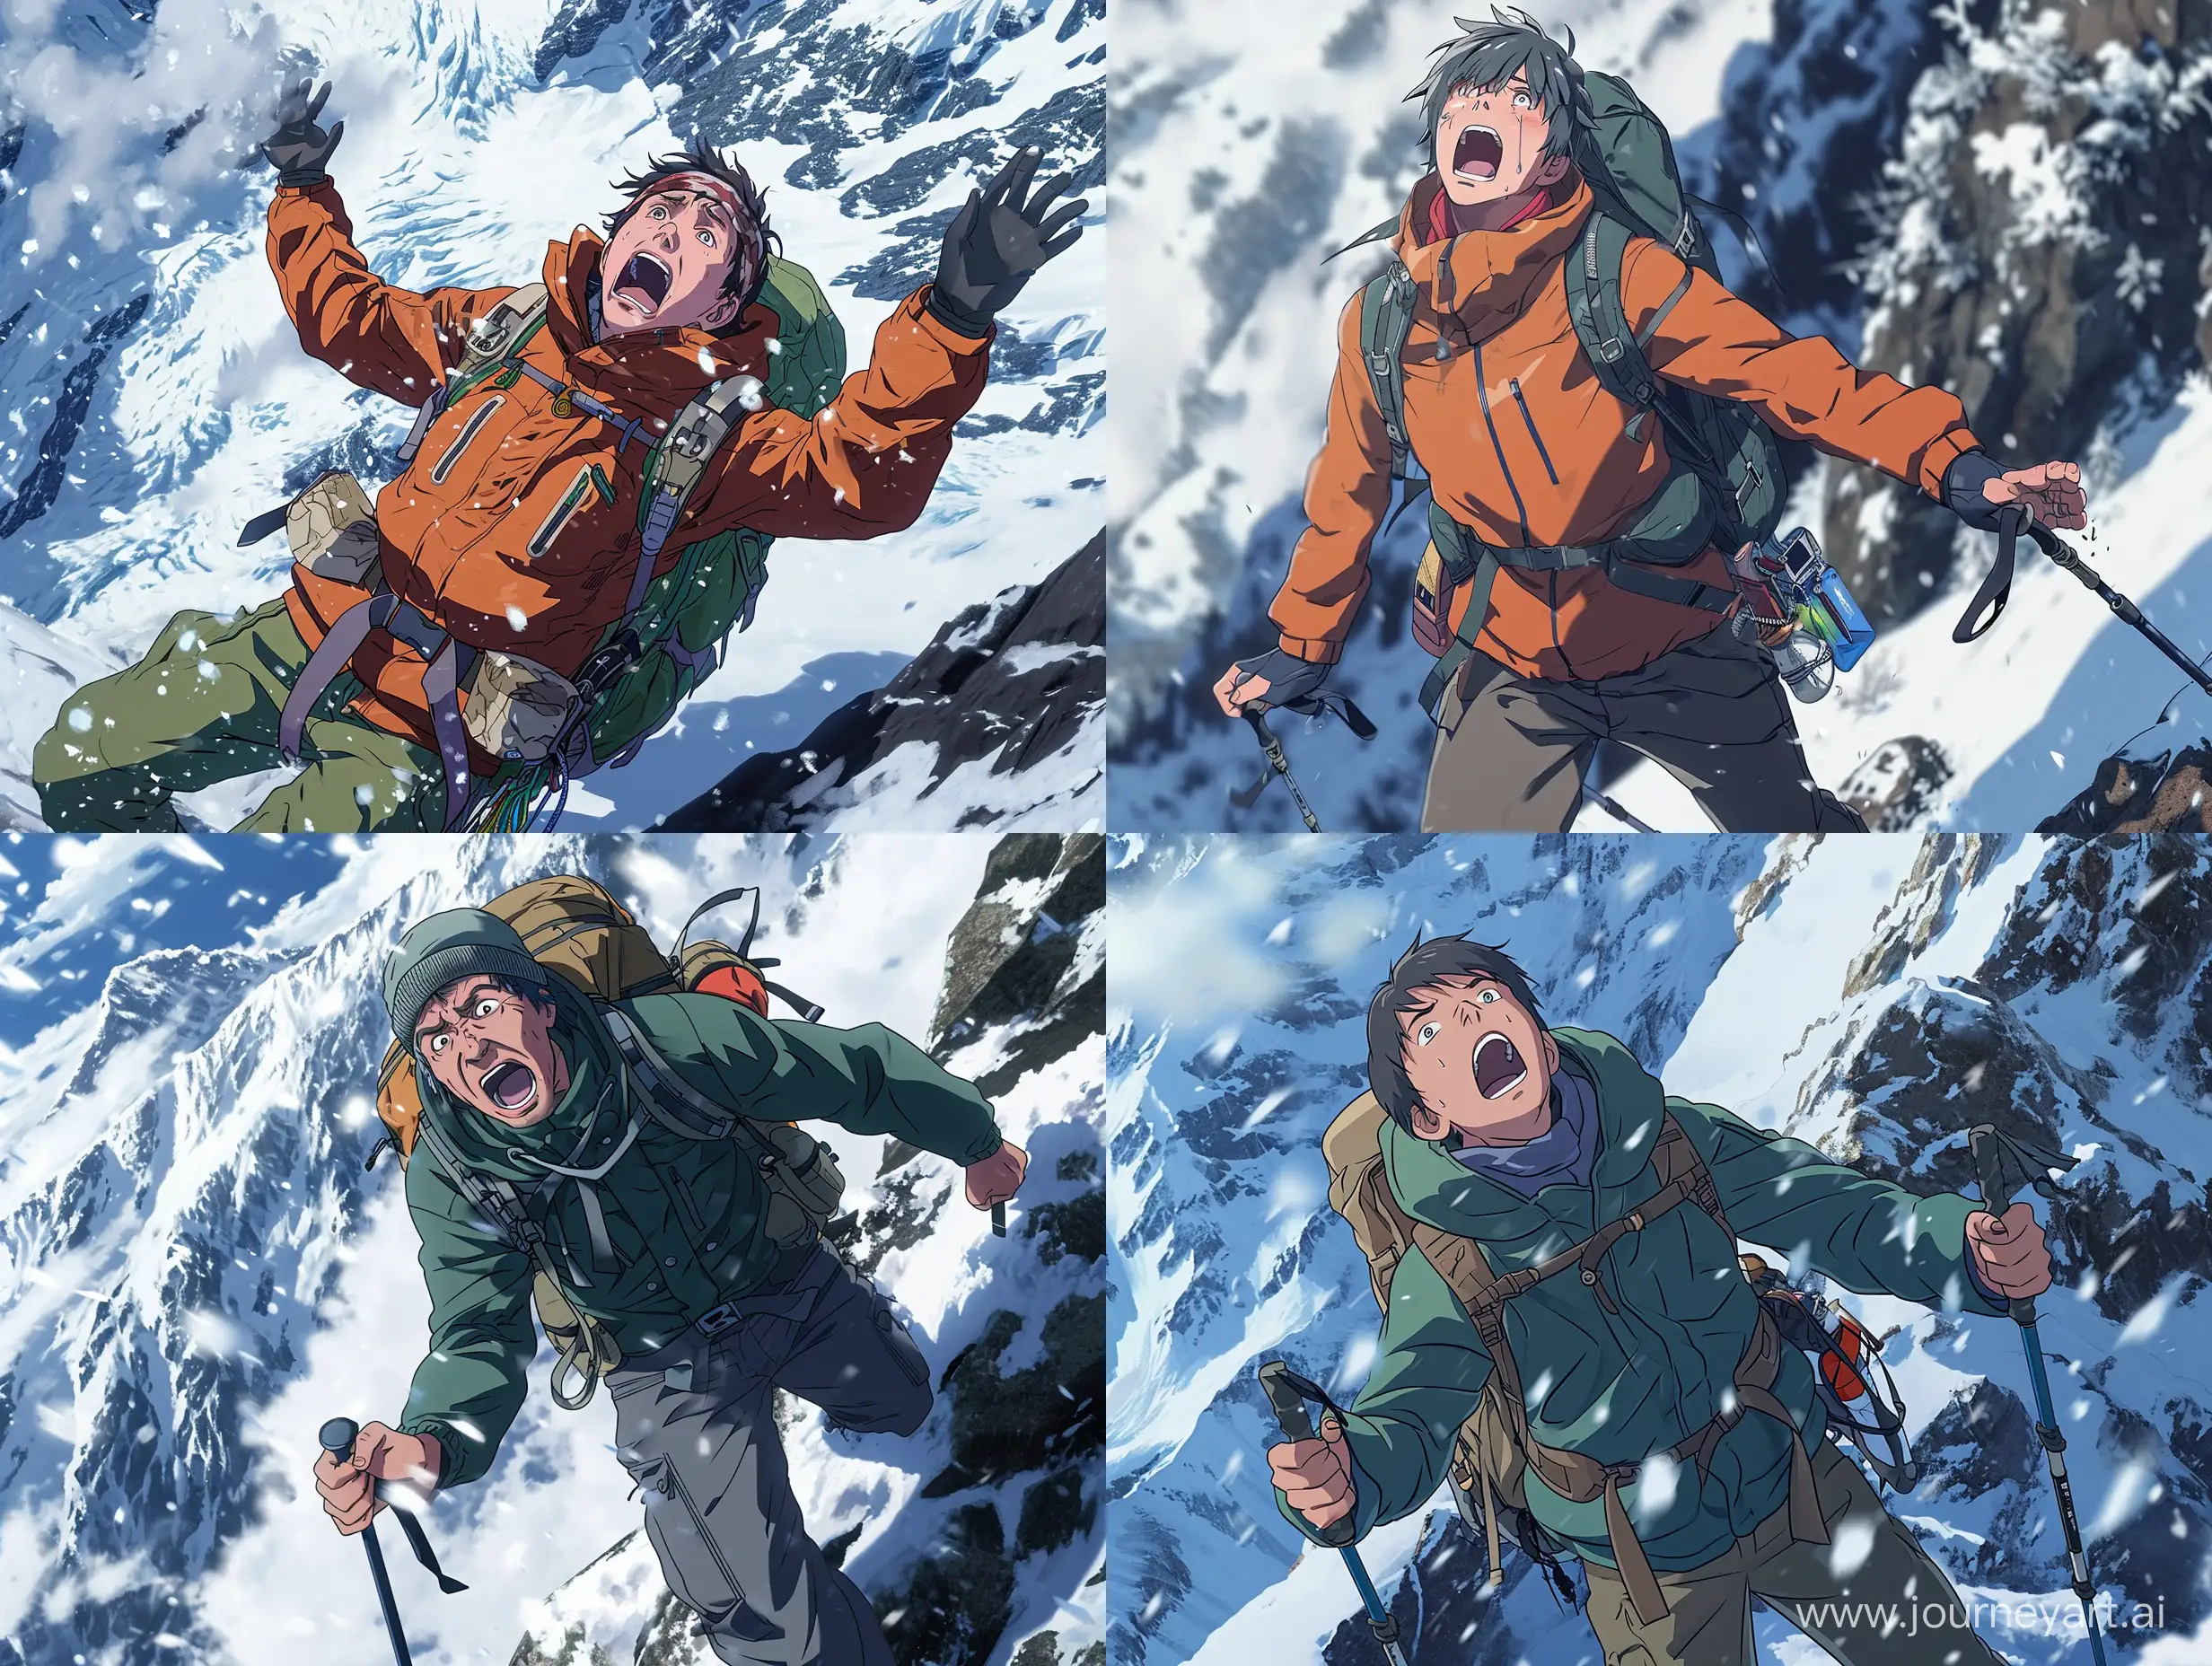 Panicking-Hiker-in-Snowy-Mountain-Adventure-HighQuality-Anime-Scene